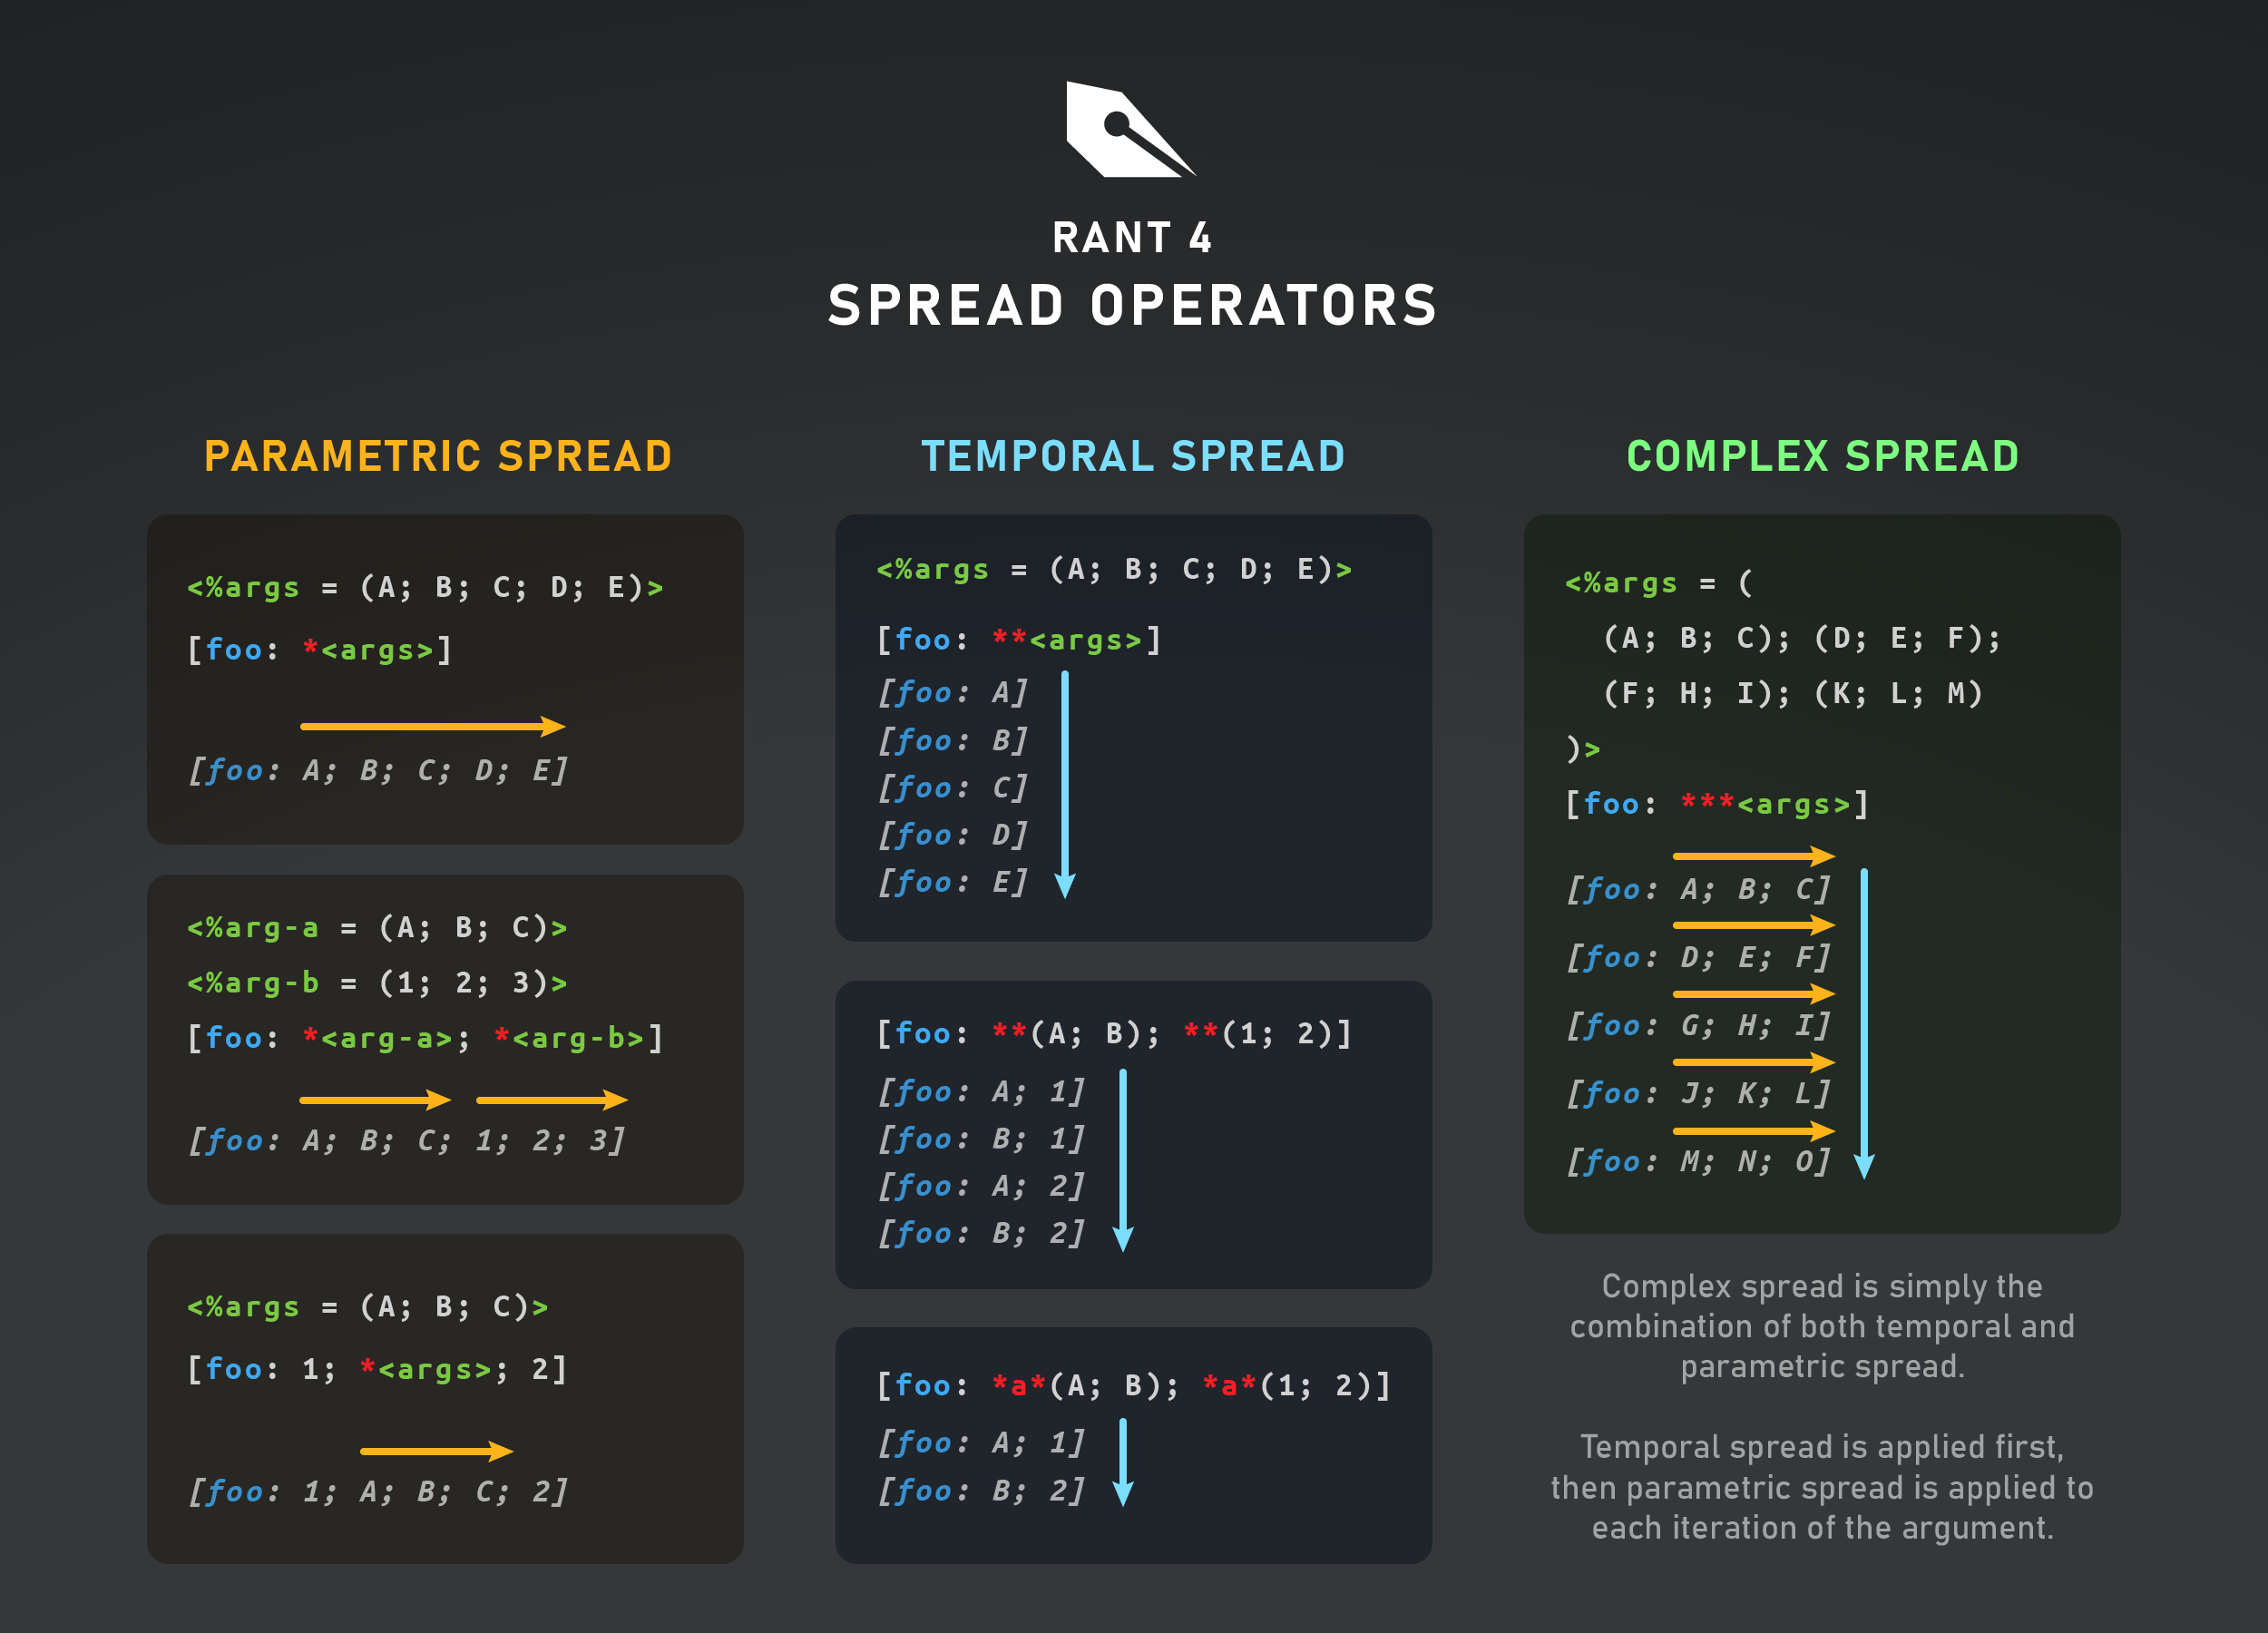 Rant 4 spread operator infographic